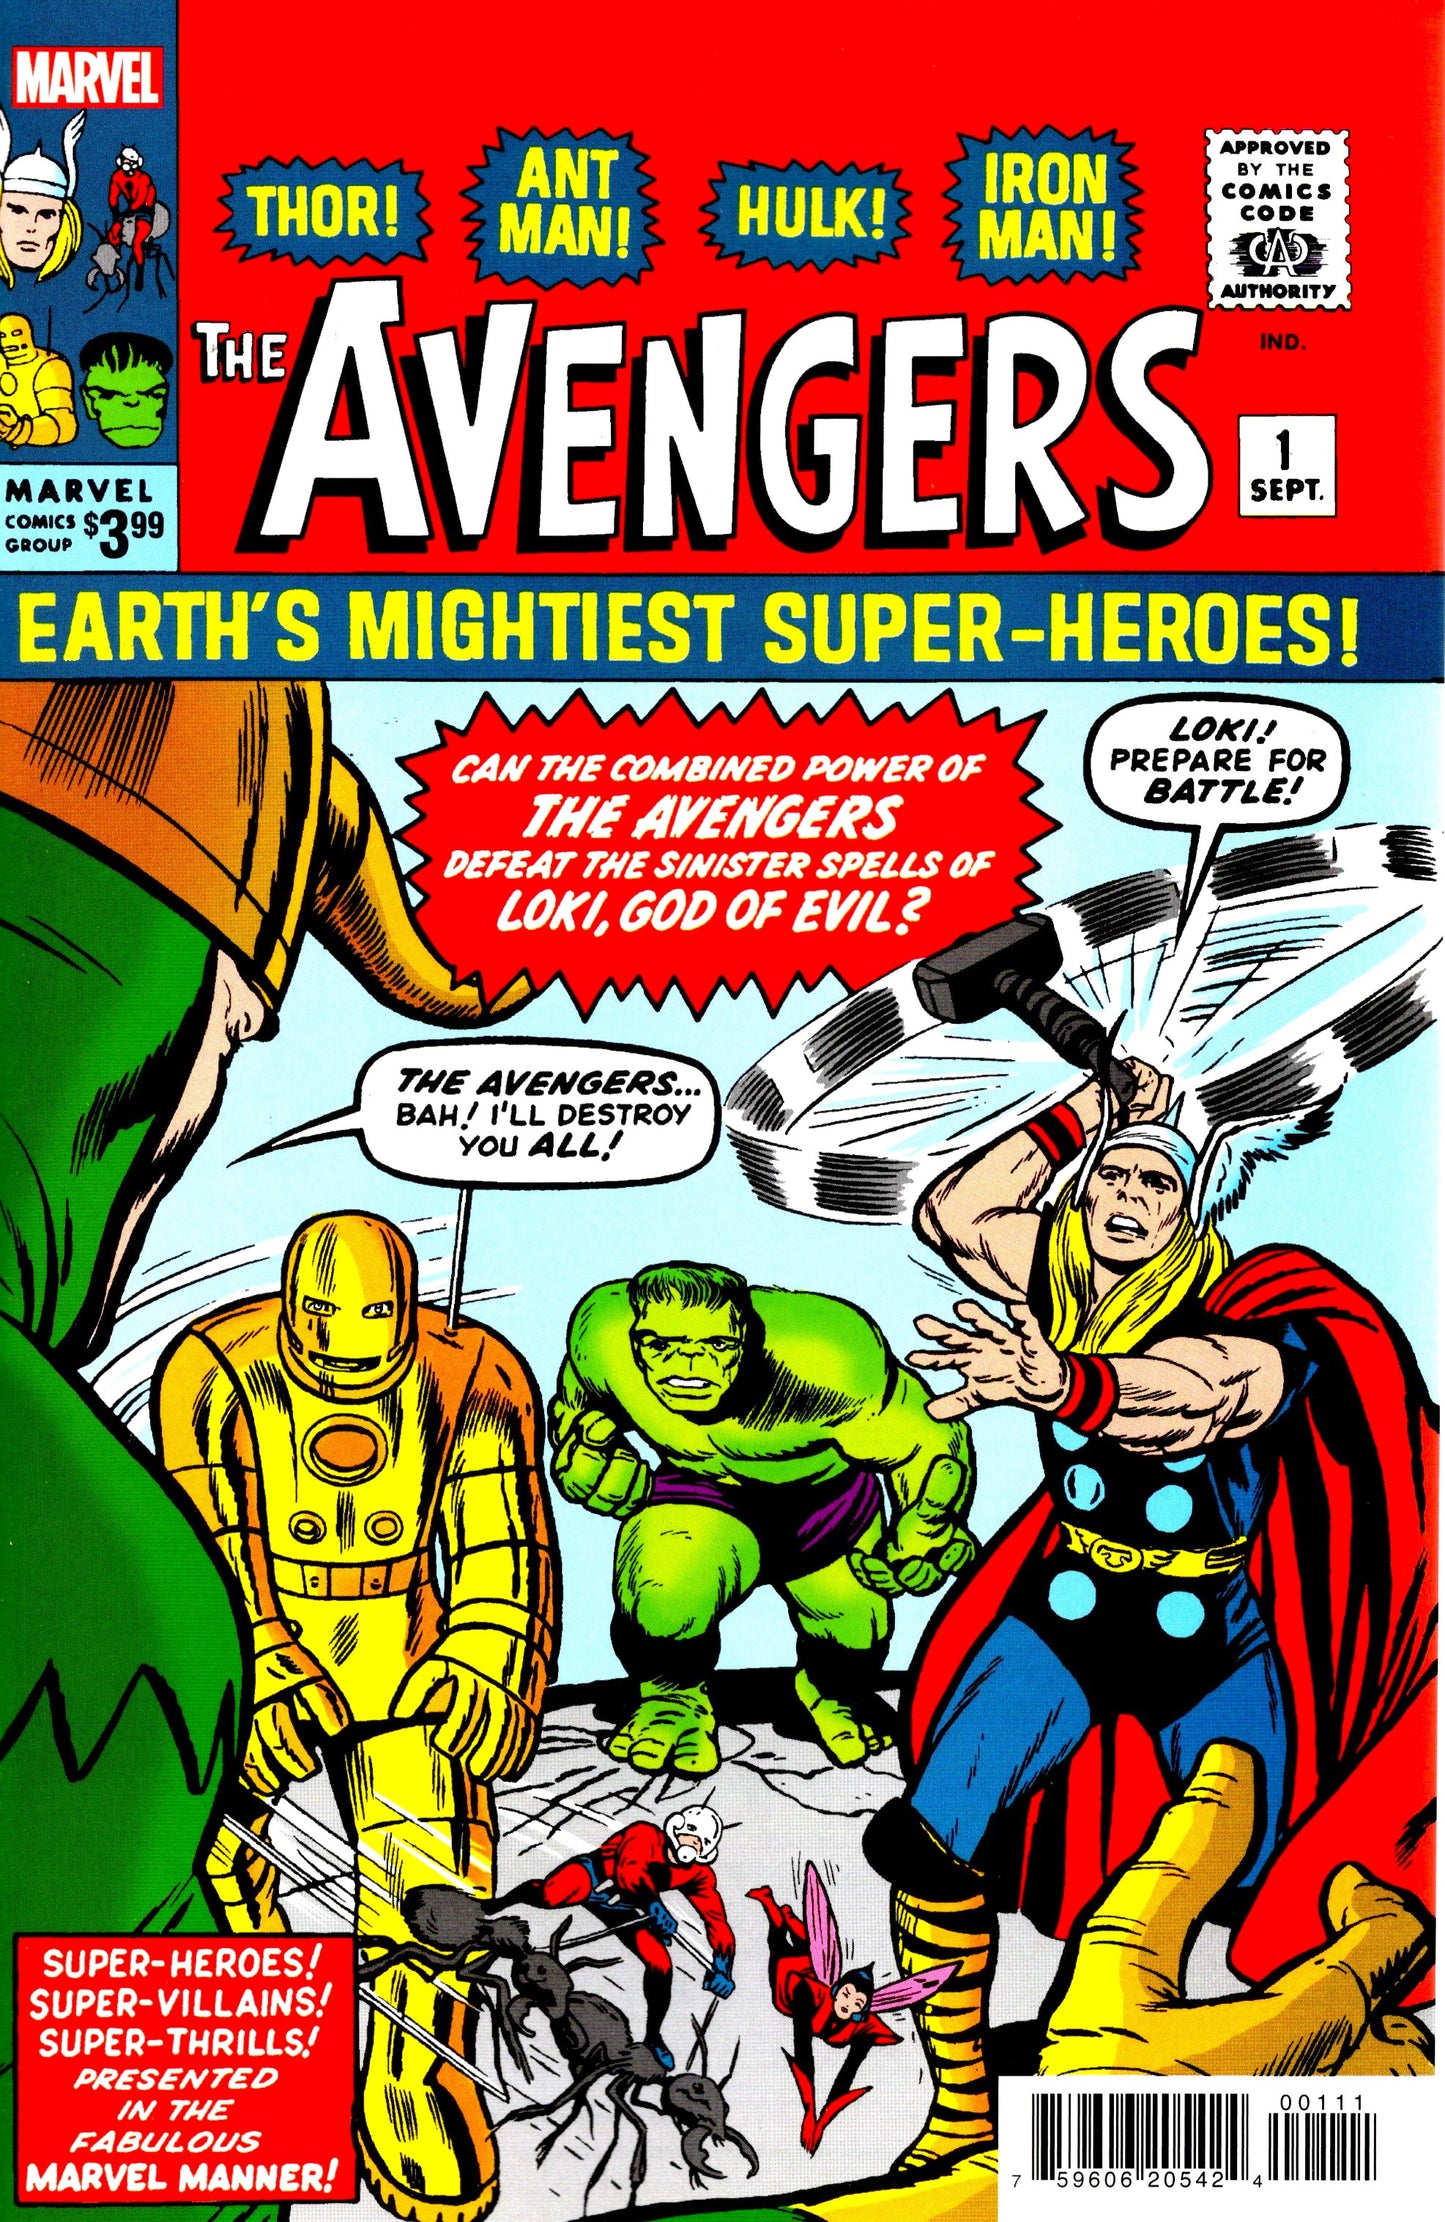 The Avengers #1 (1963) Facsimile Variant